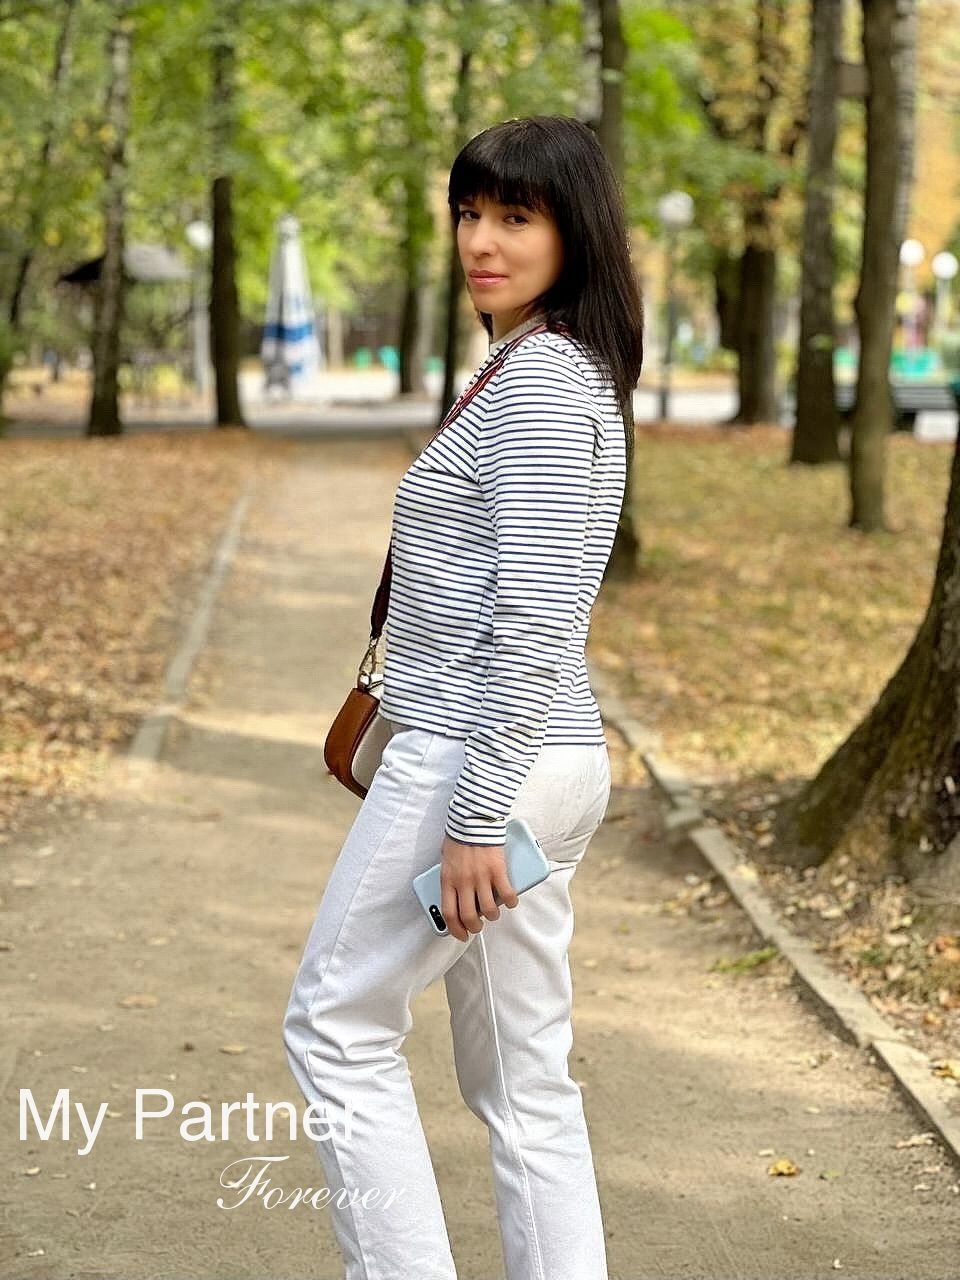 Dating with Pretty Ukrainian Girl Anna from Vinnitsa, Ukraine